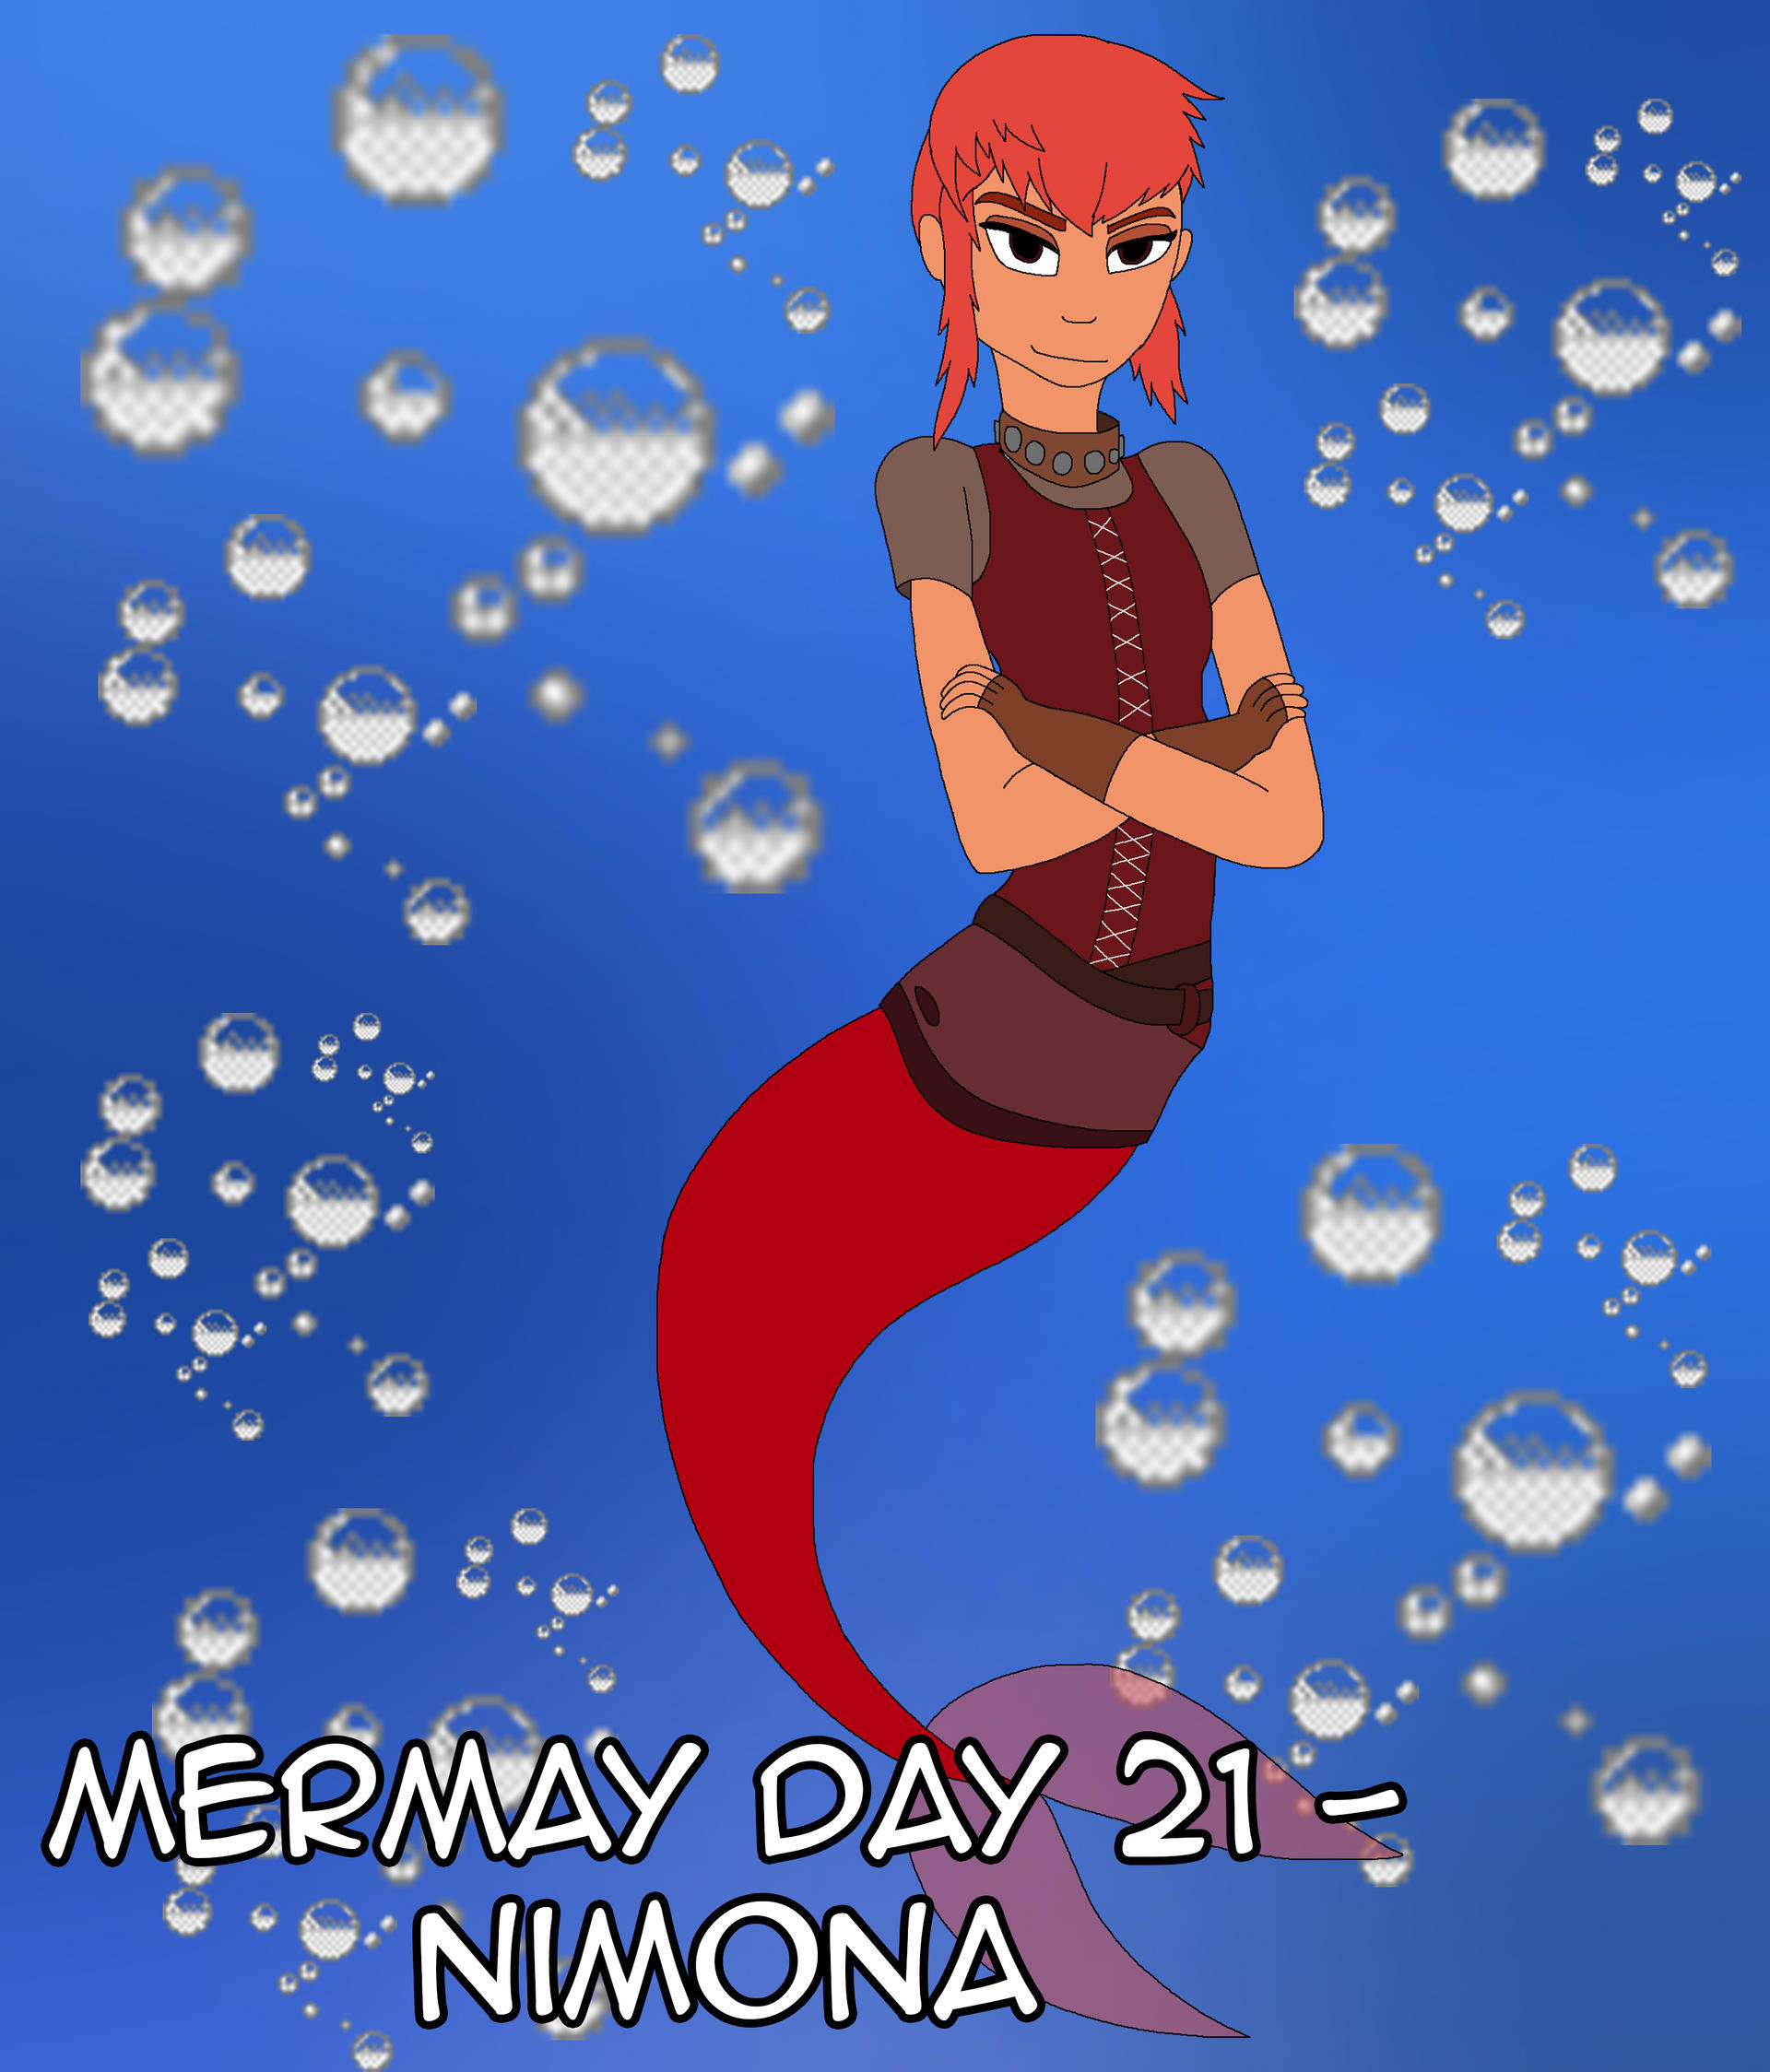 Mermay Day 21 - Nimona by HiroHamadaRockz on DeviantArt